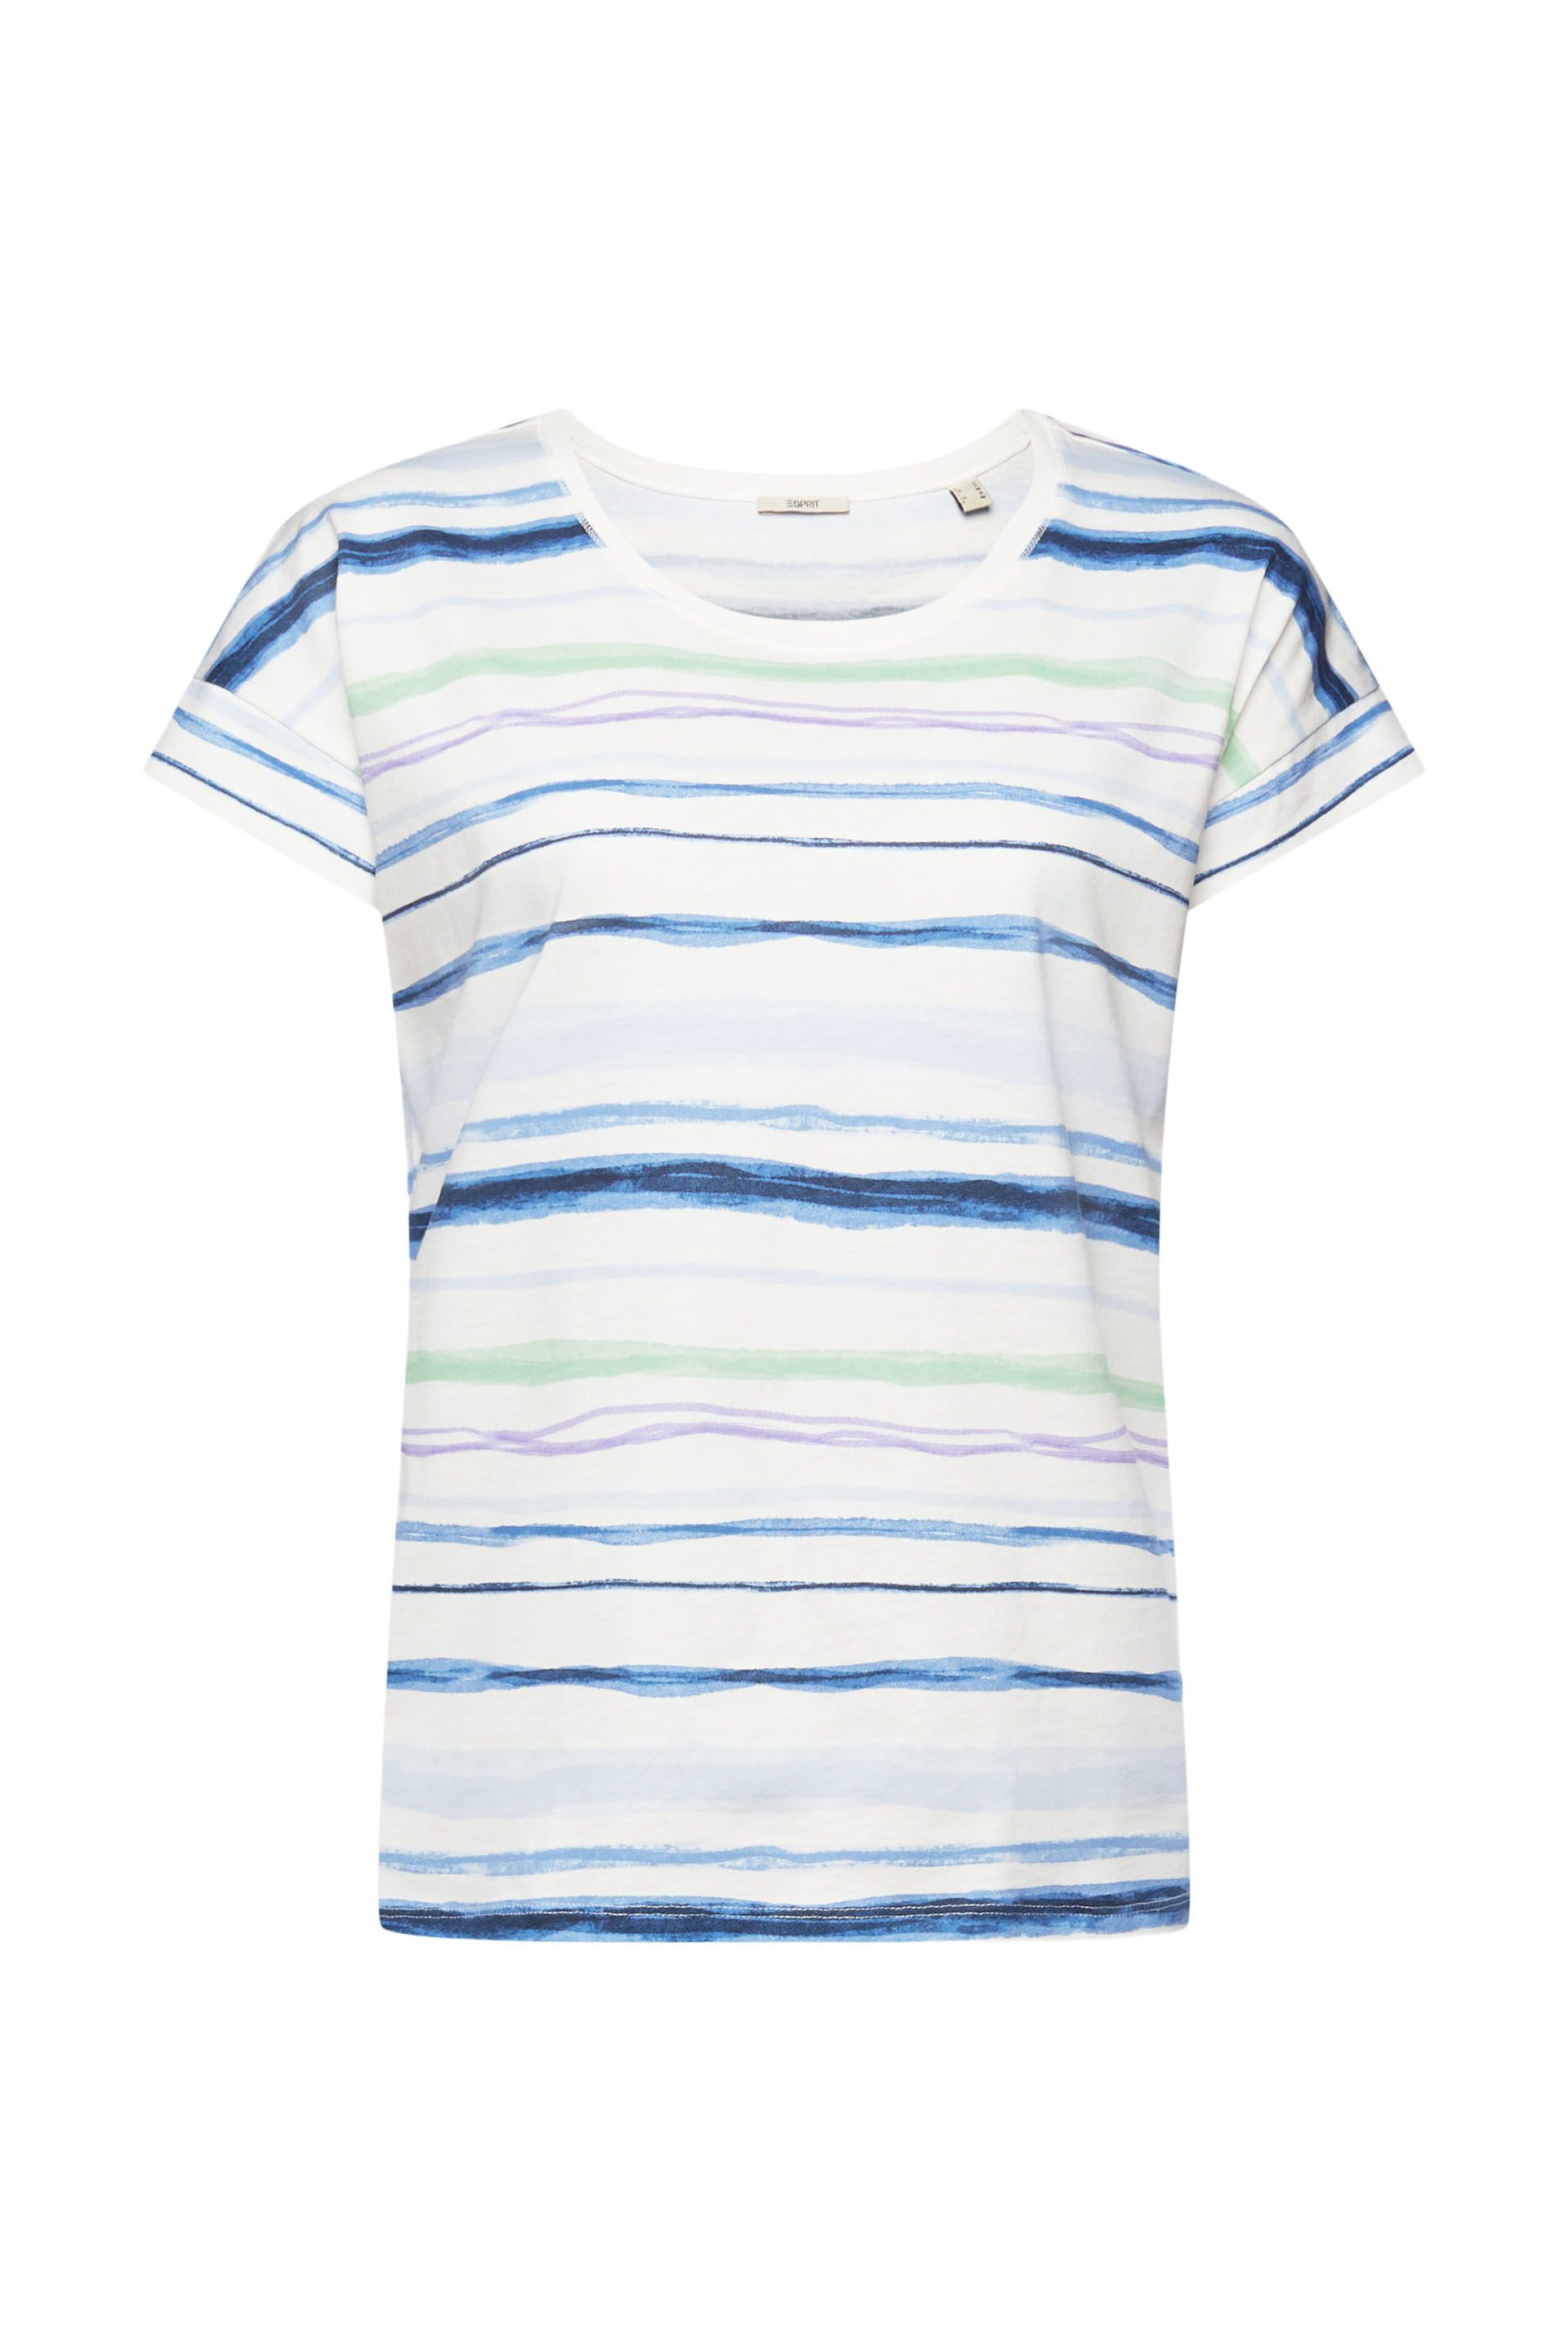 Esprit - Striped cotton T-shirt, Blue, large image number 0